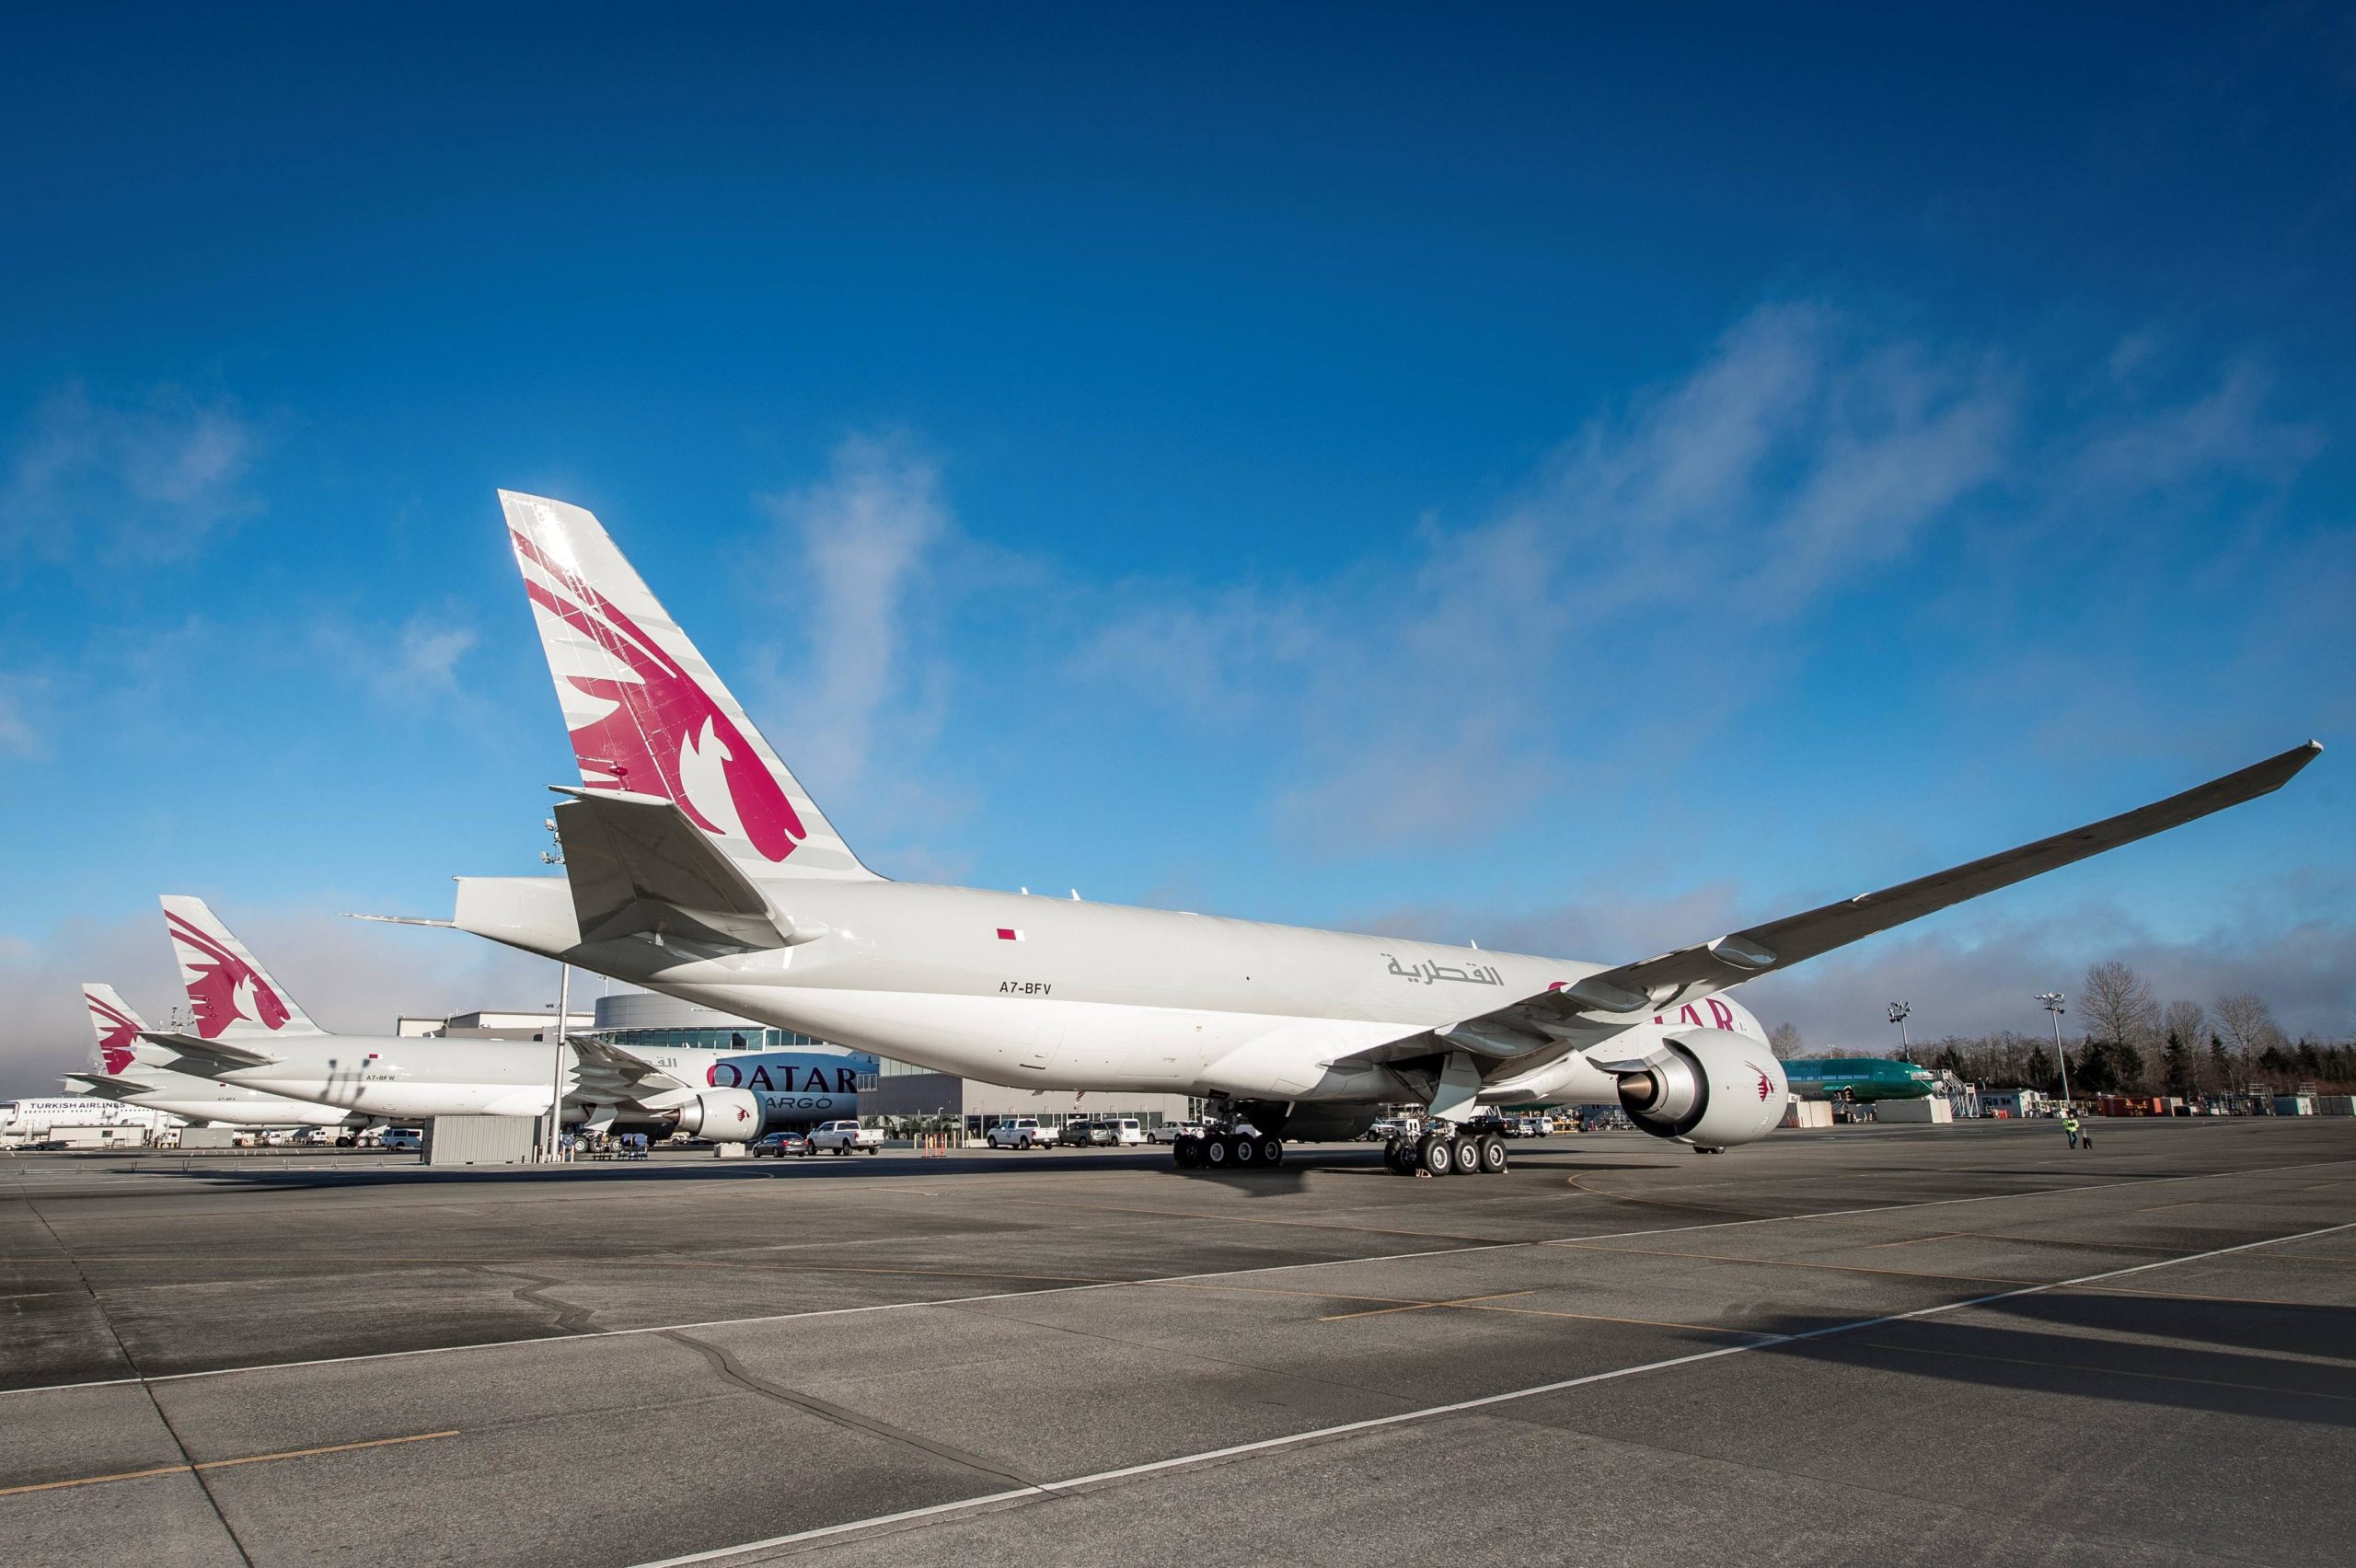 Qatar Airays Cargo aircraft parked.